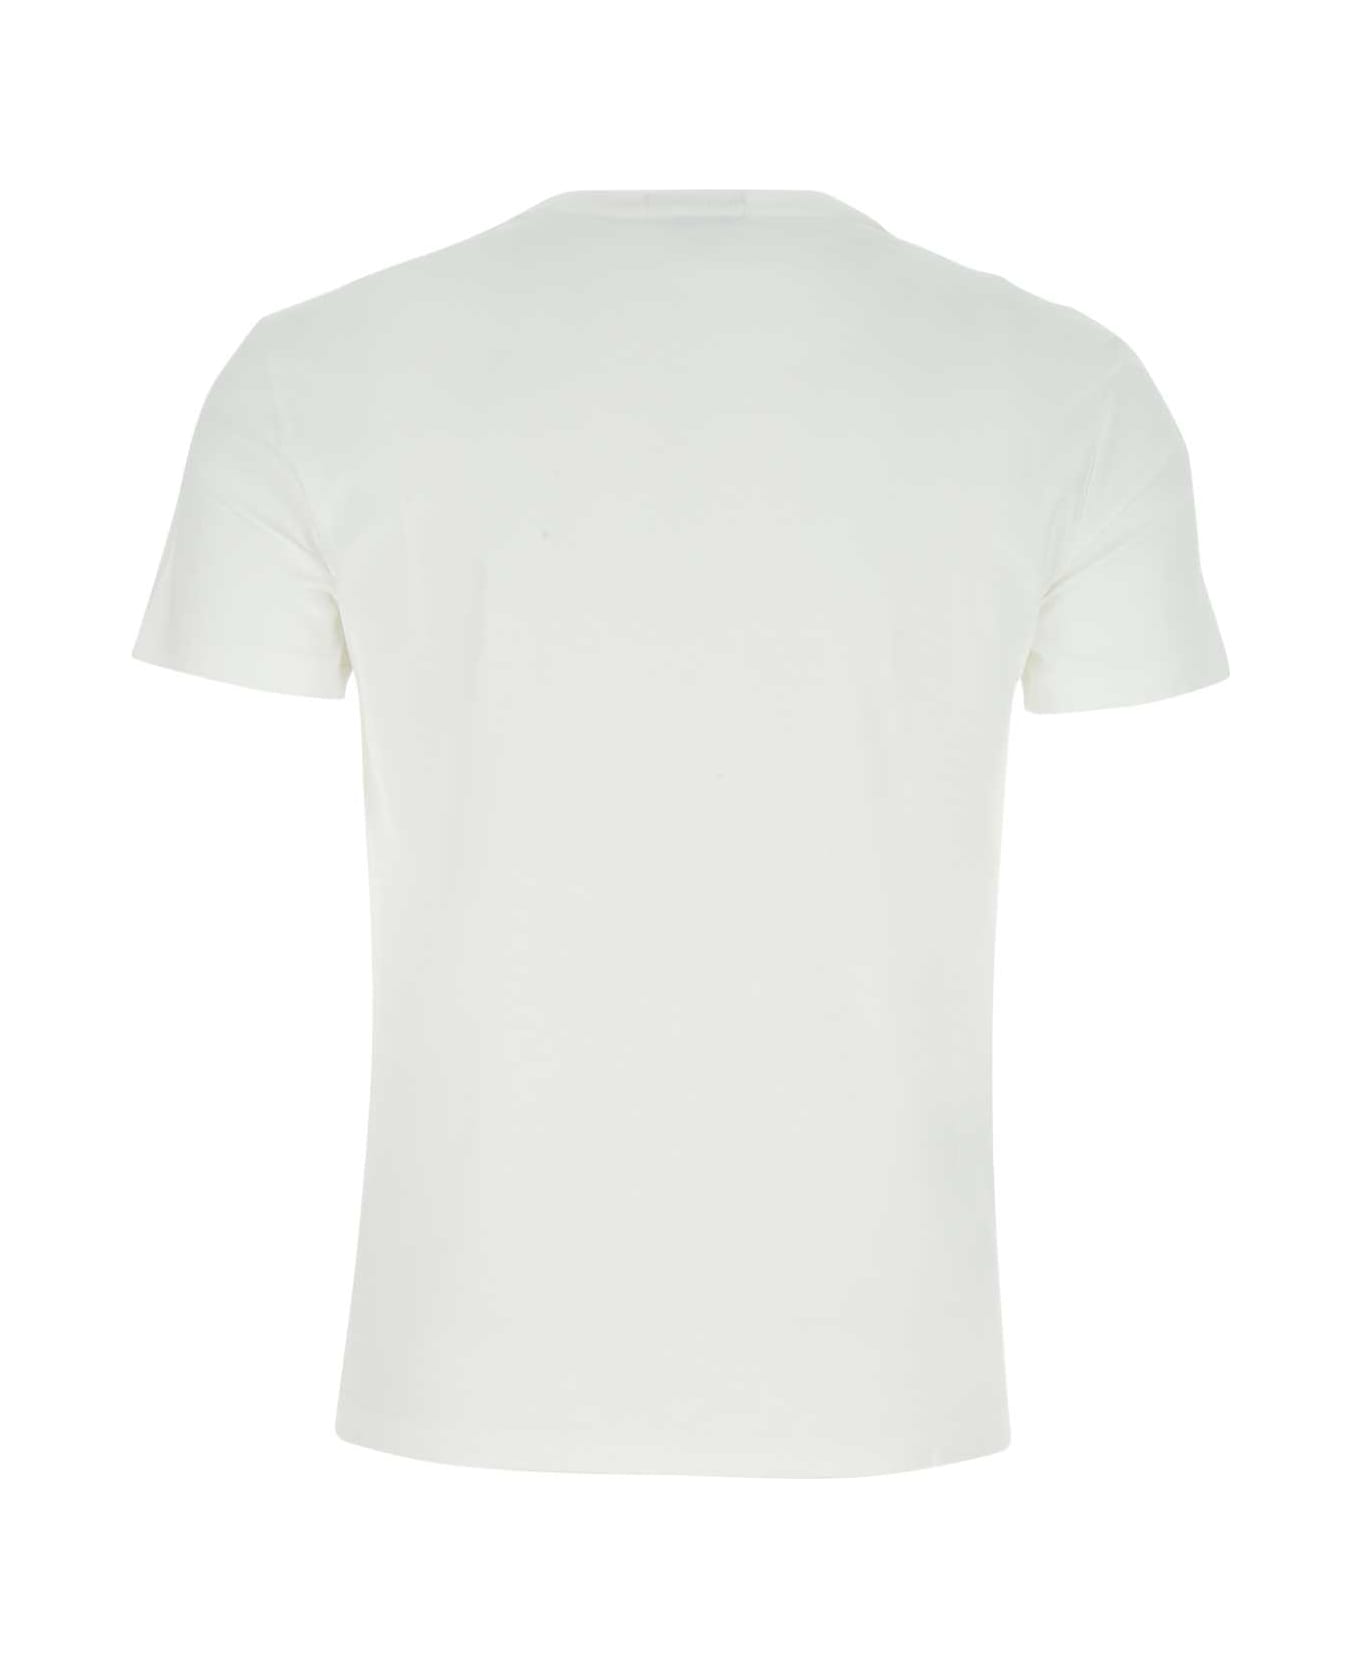 Polo Ralph Lauren White Cotton T-shirt - 002